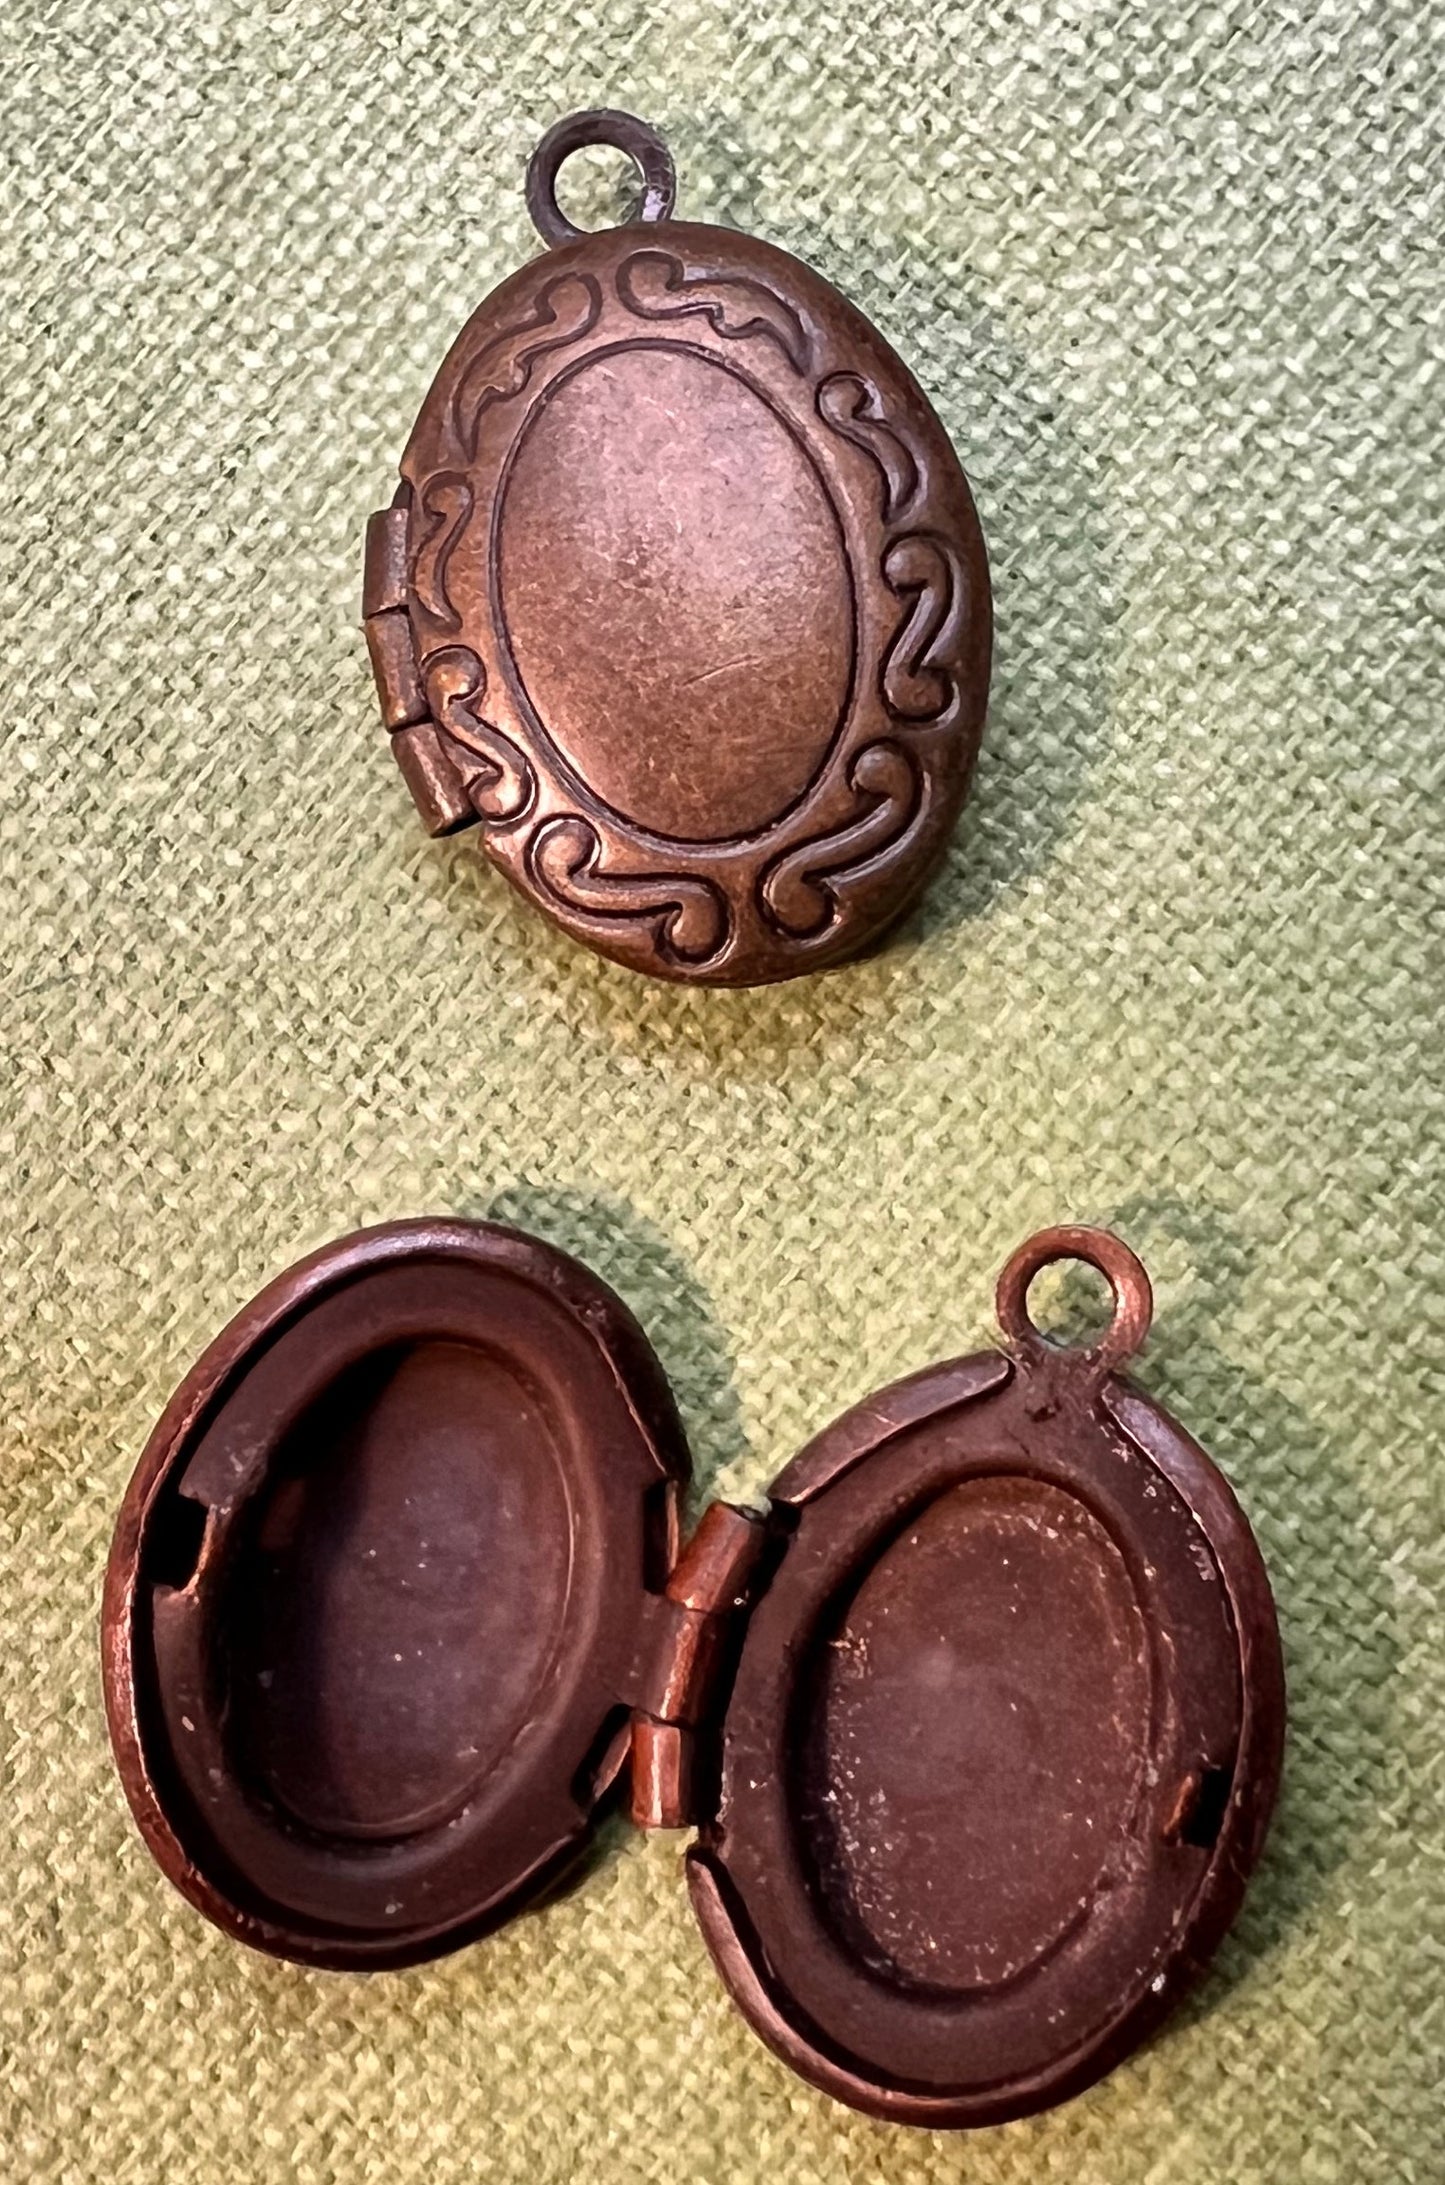 Tiny 1.3cm Lockets - Bronze or Copper Tone